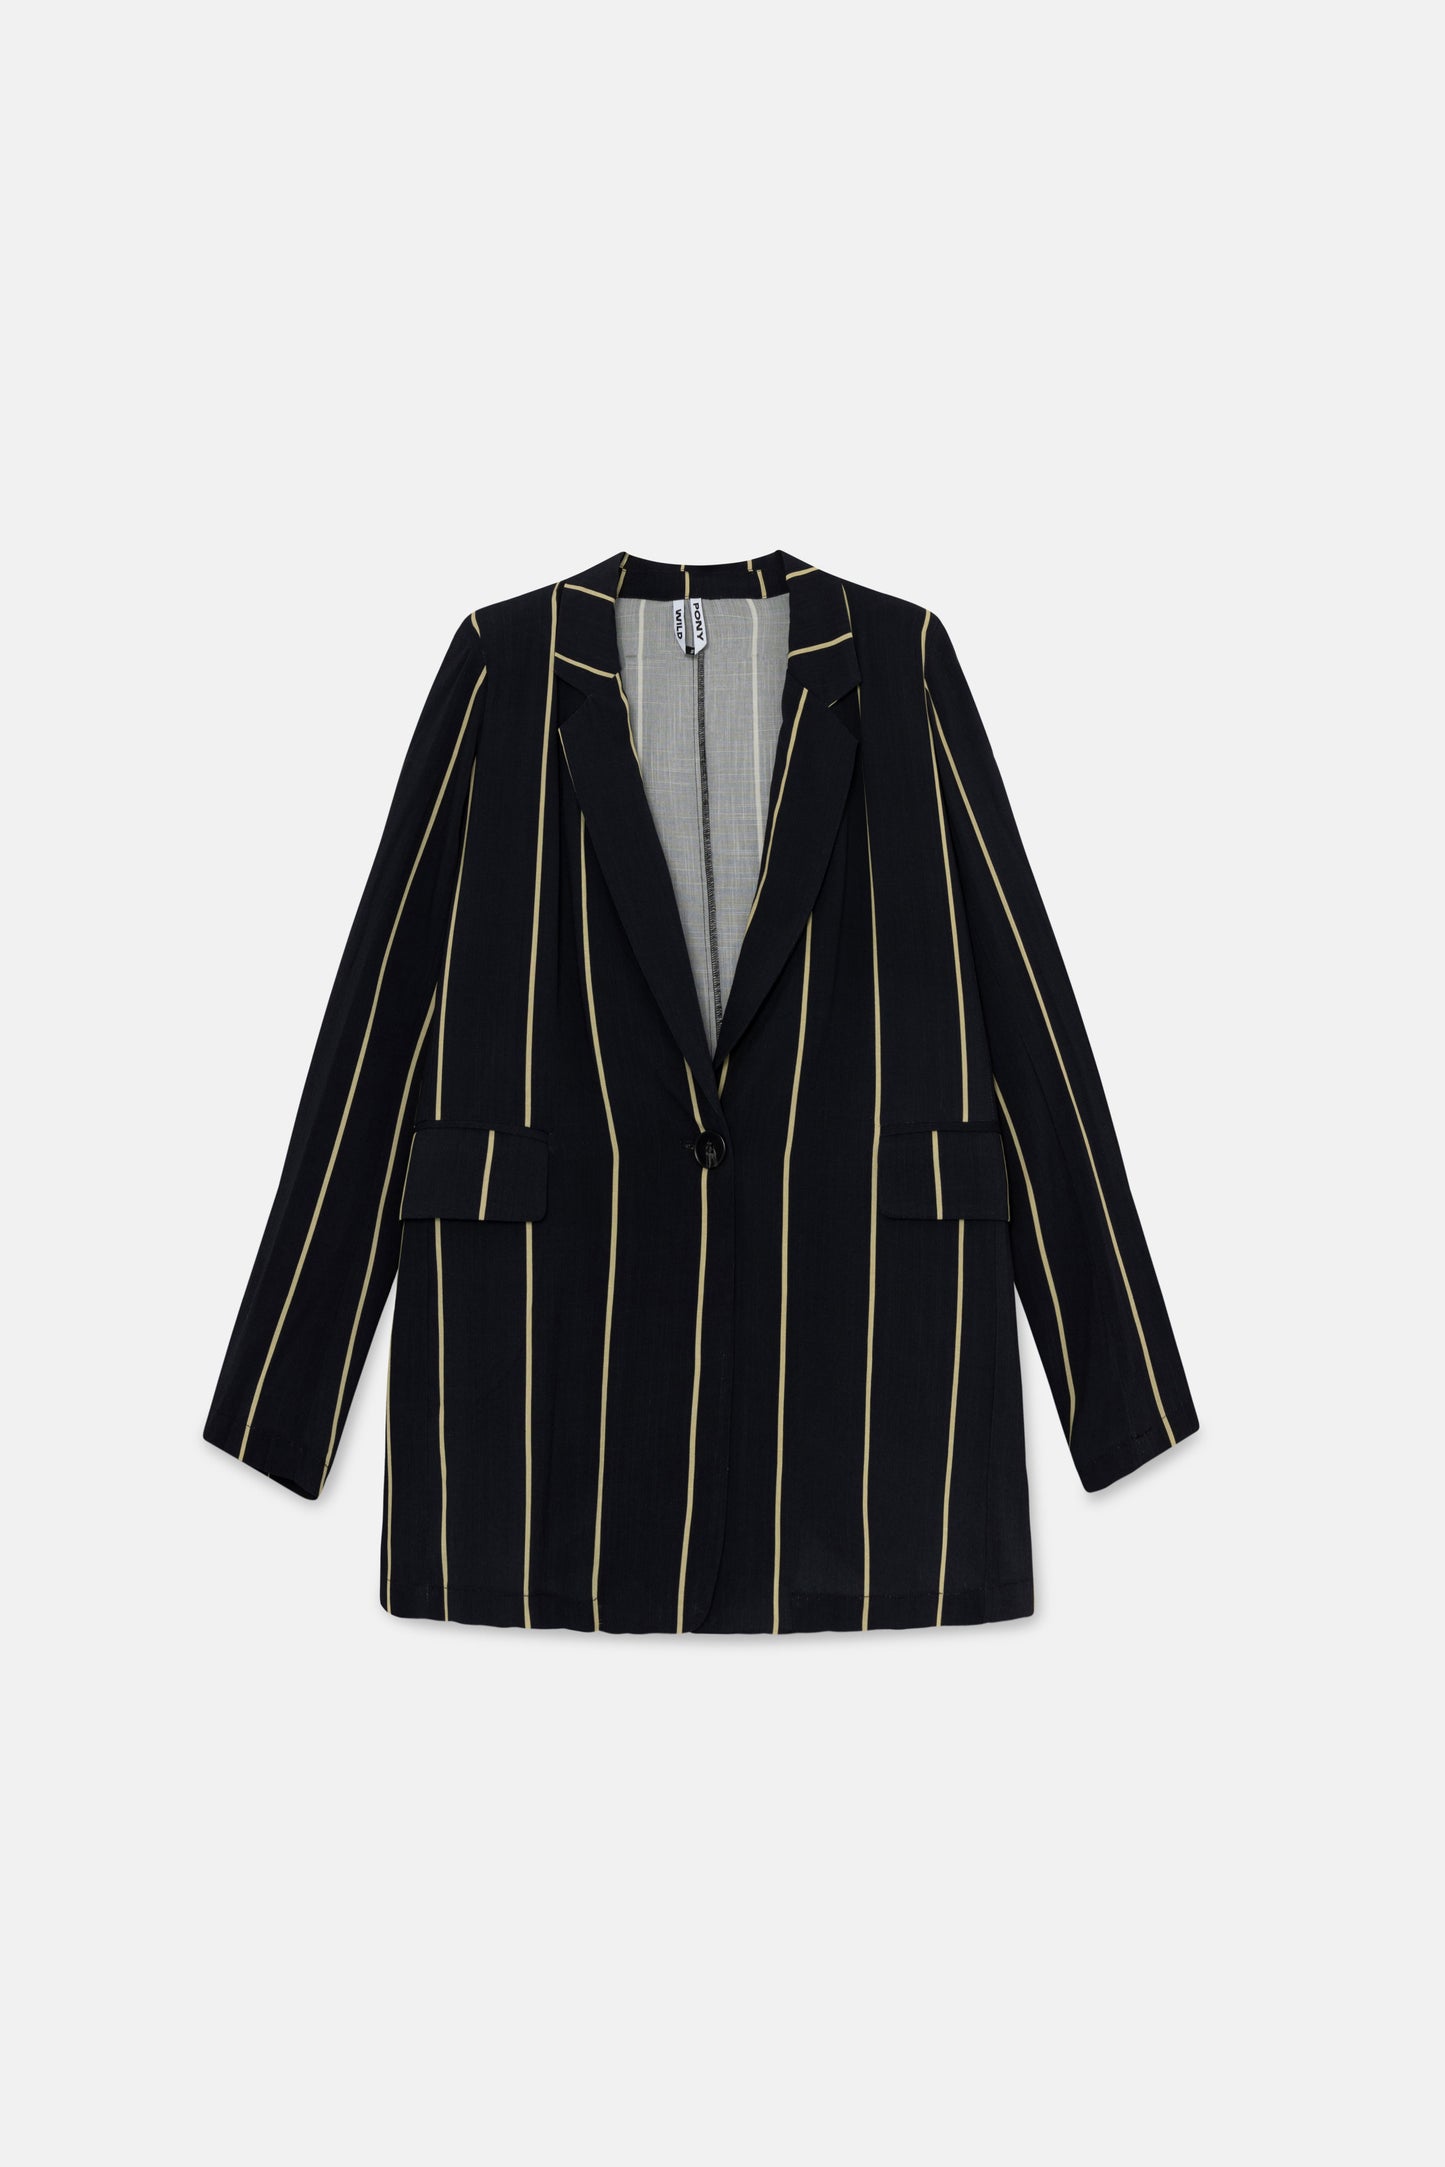 Black striped suit blazer